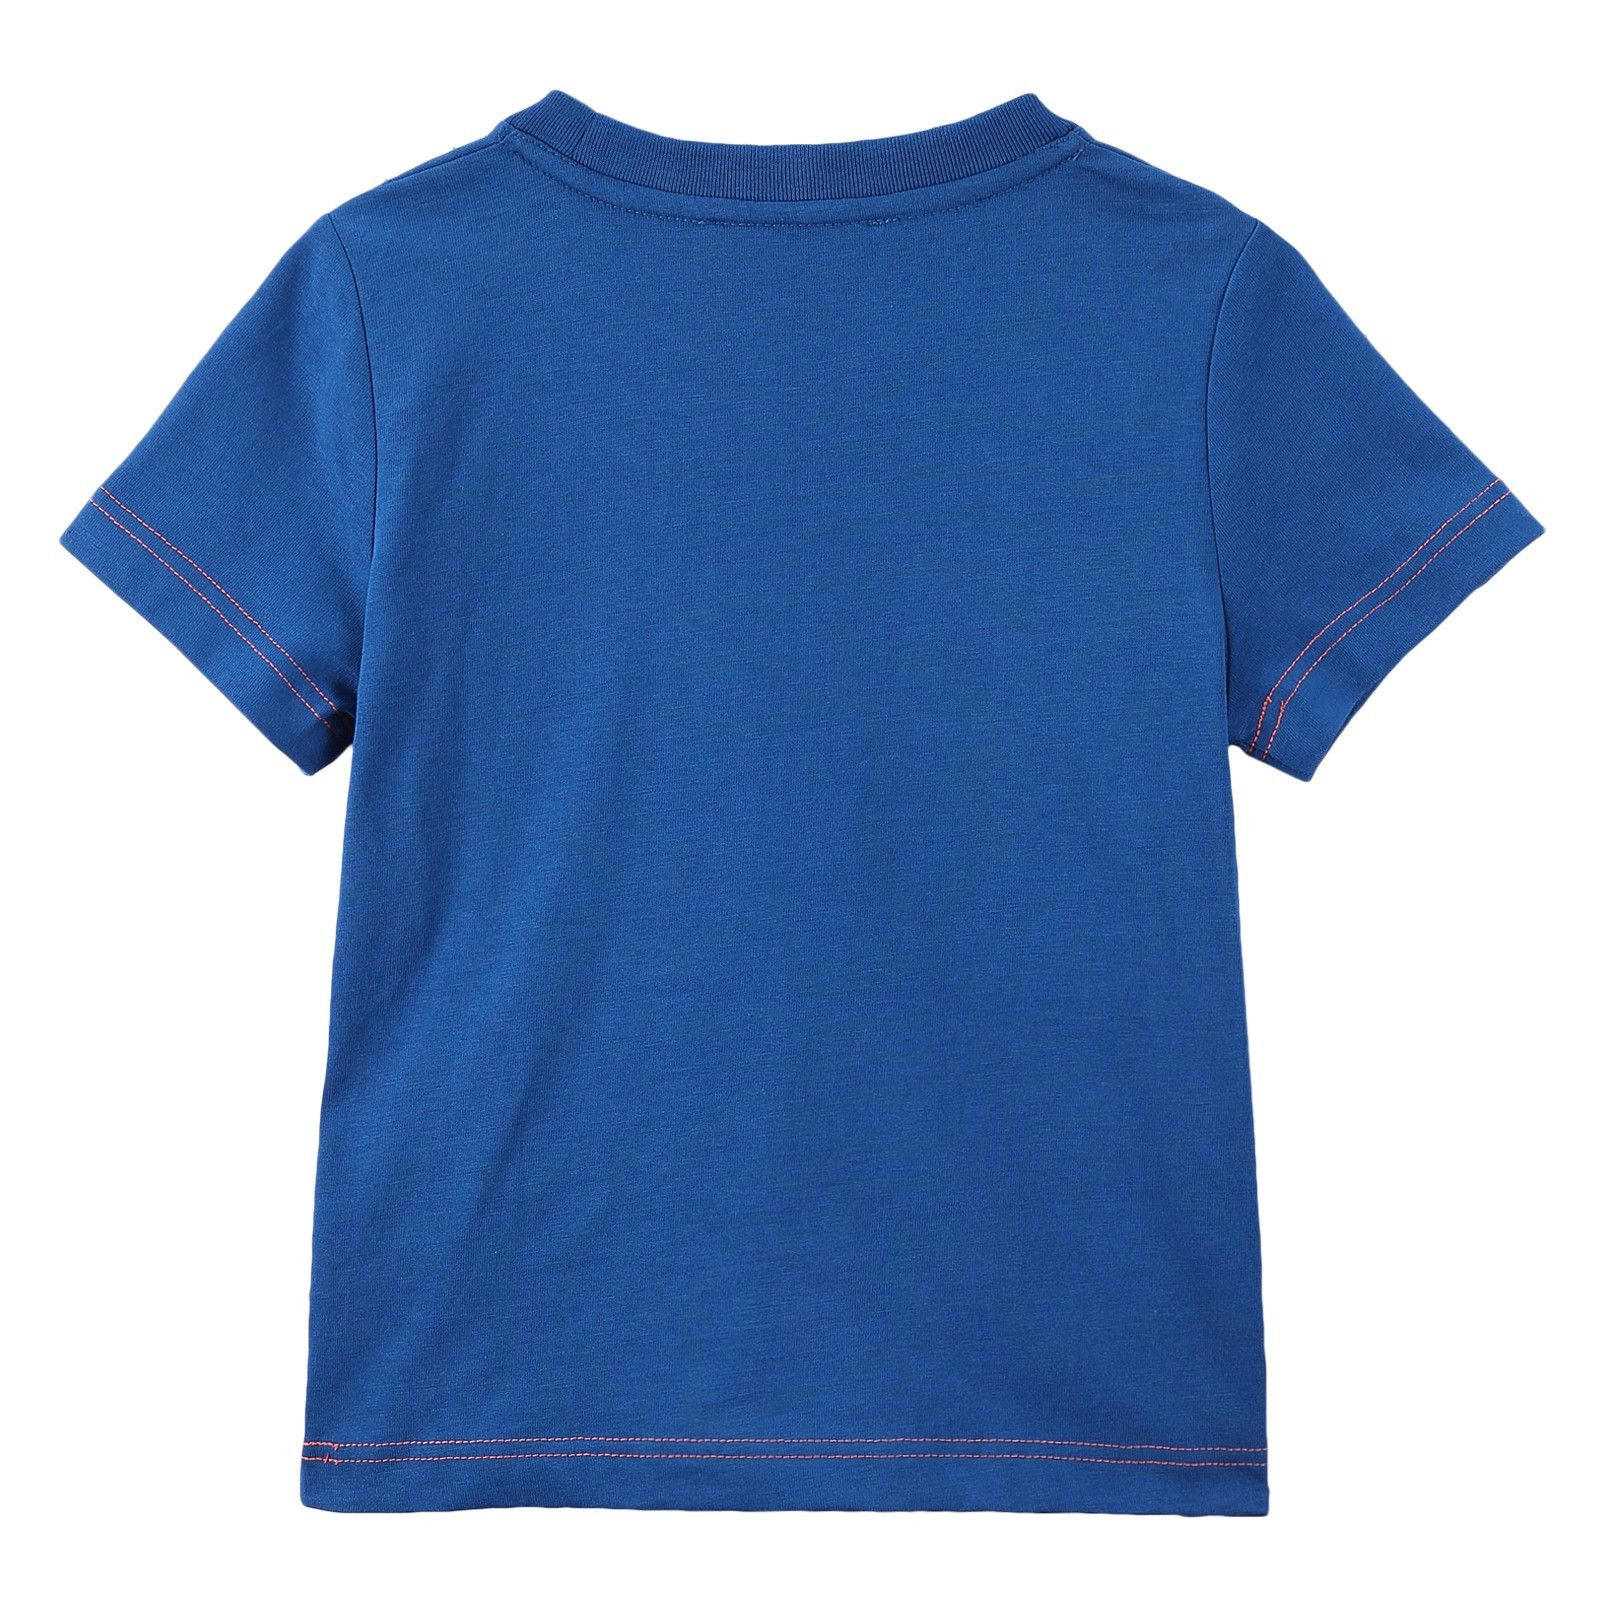 Boys Blue 'Mr Marc' Printed Cotton Jersey T-Shirt - CÉMAROSE | Children's Fashion Store - 2